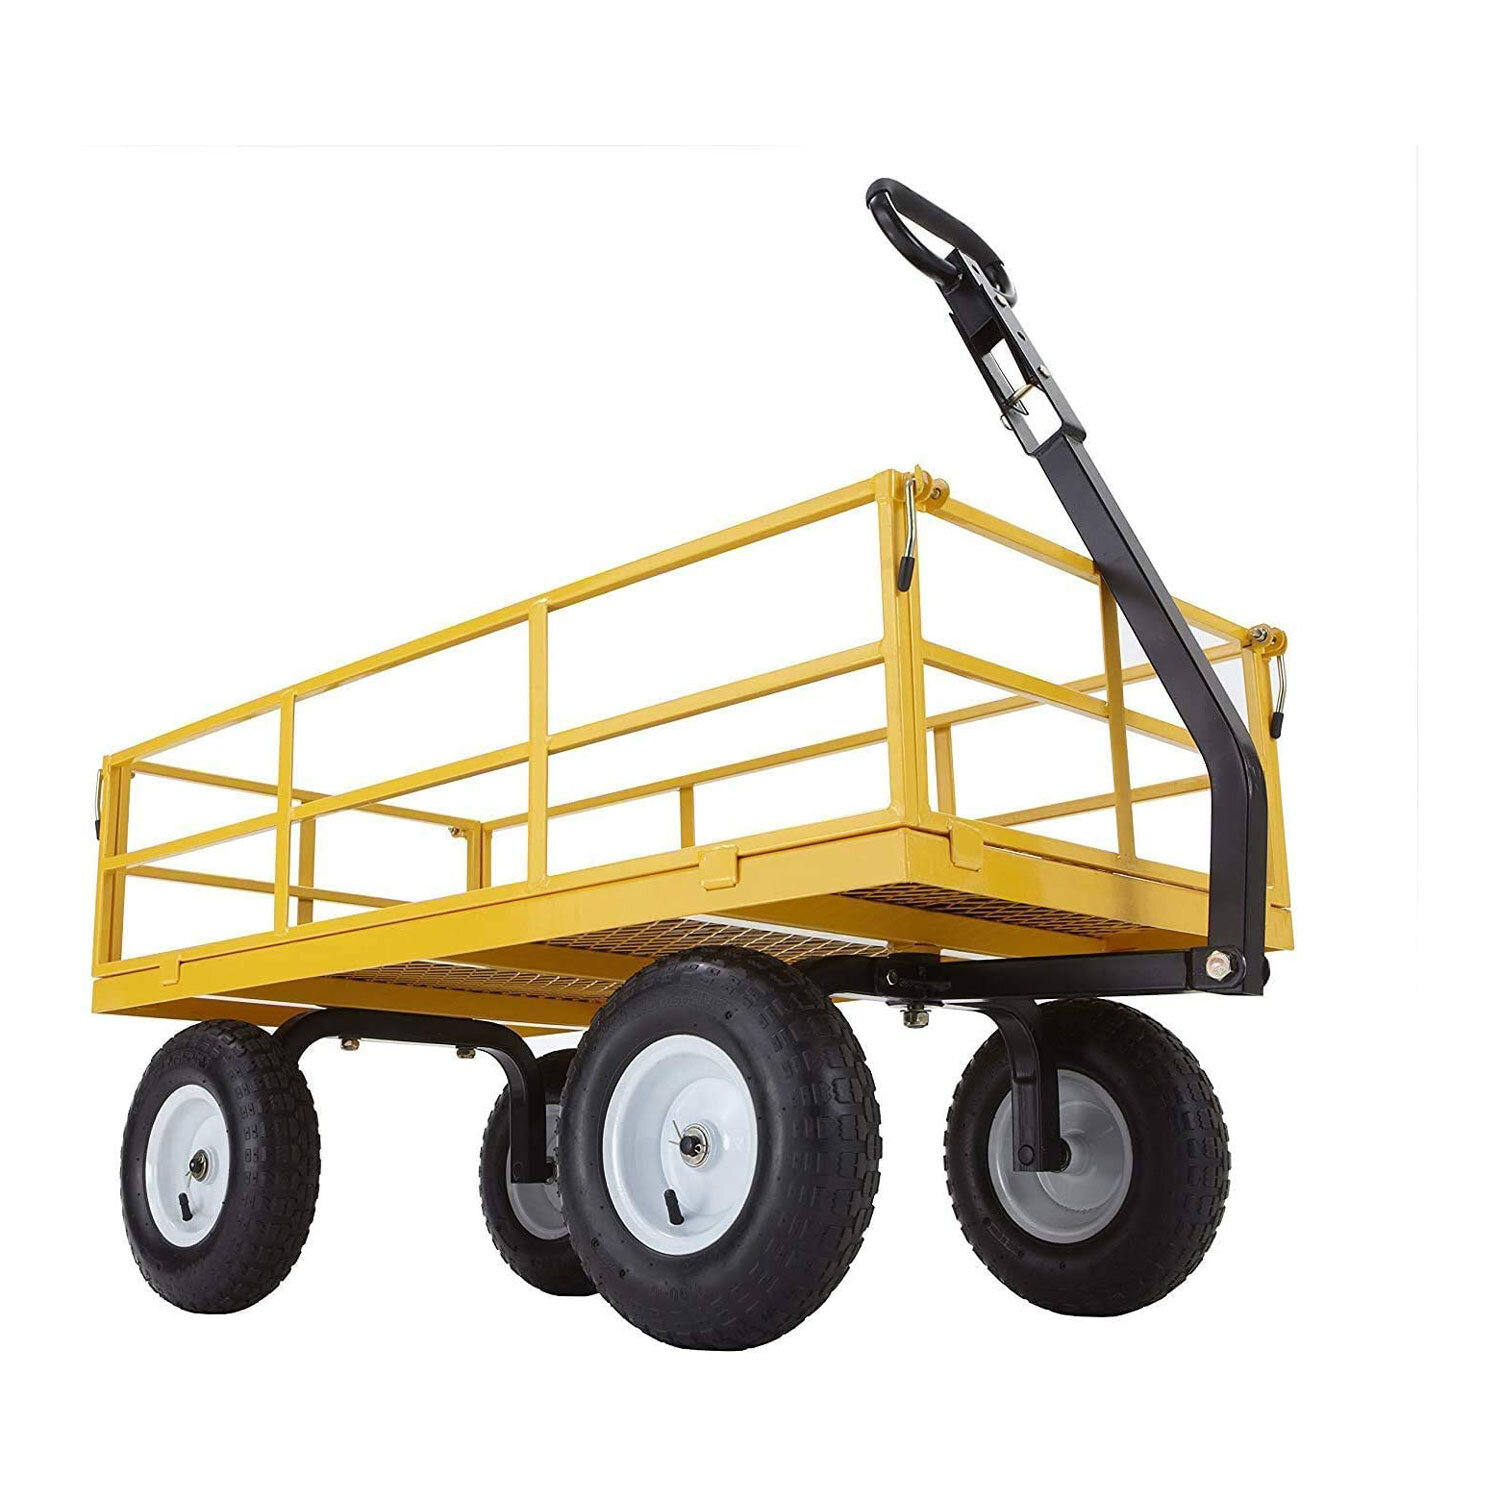 Gorilla Carts Utility Cart Wagon & Reviews